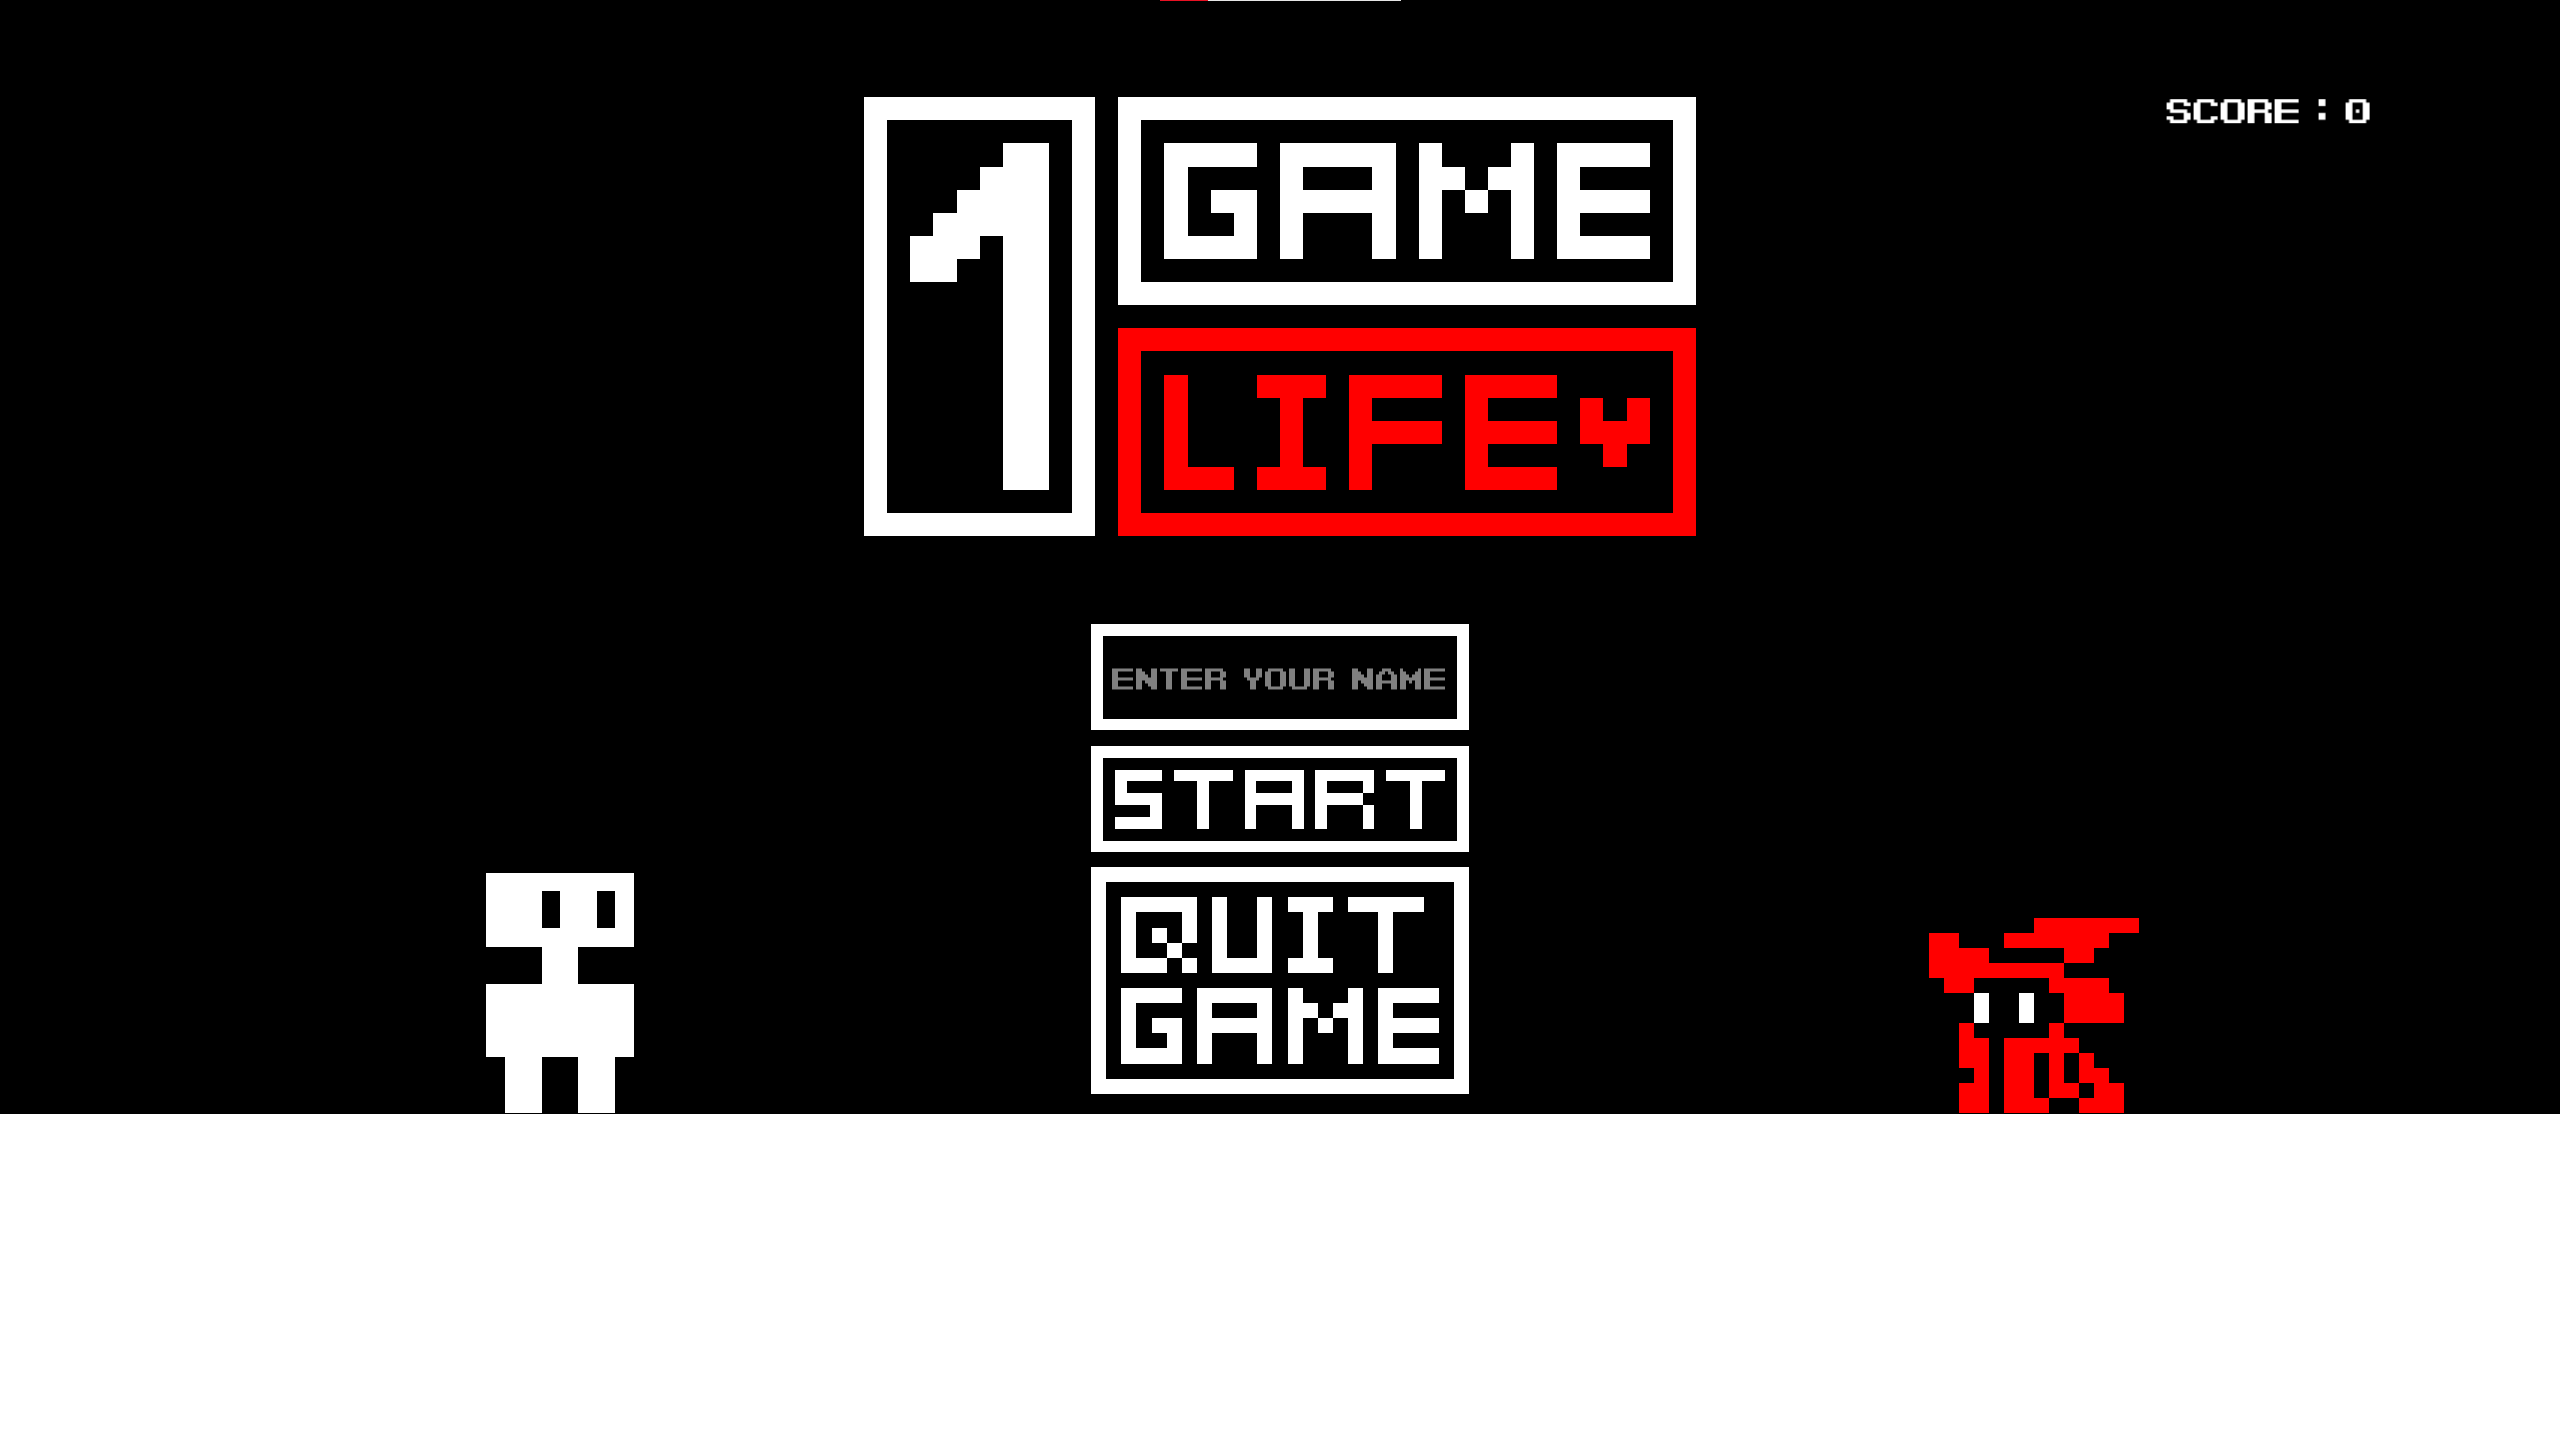 1 Game 1 Life